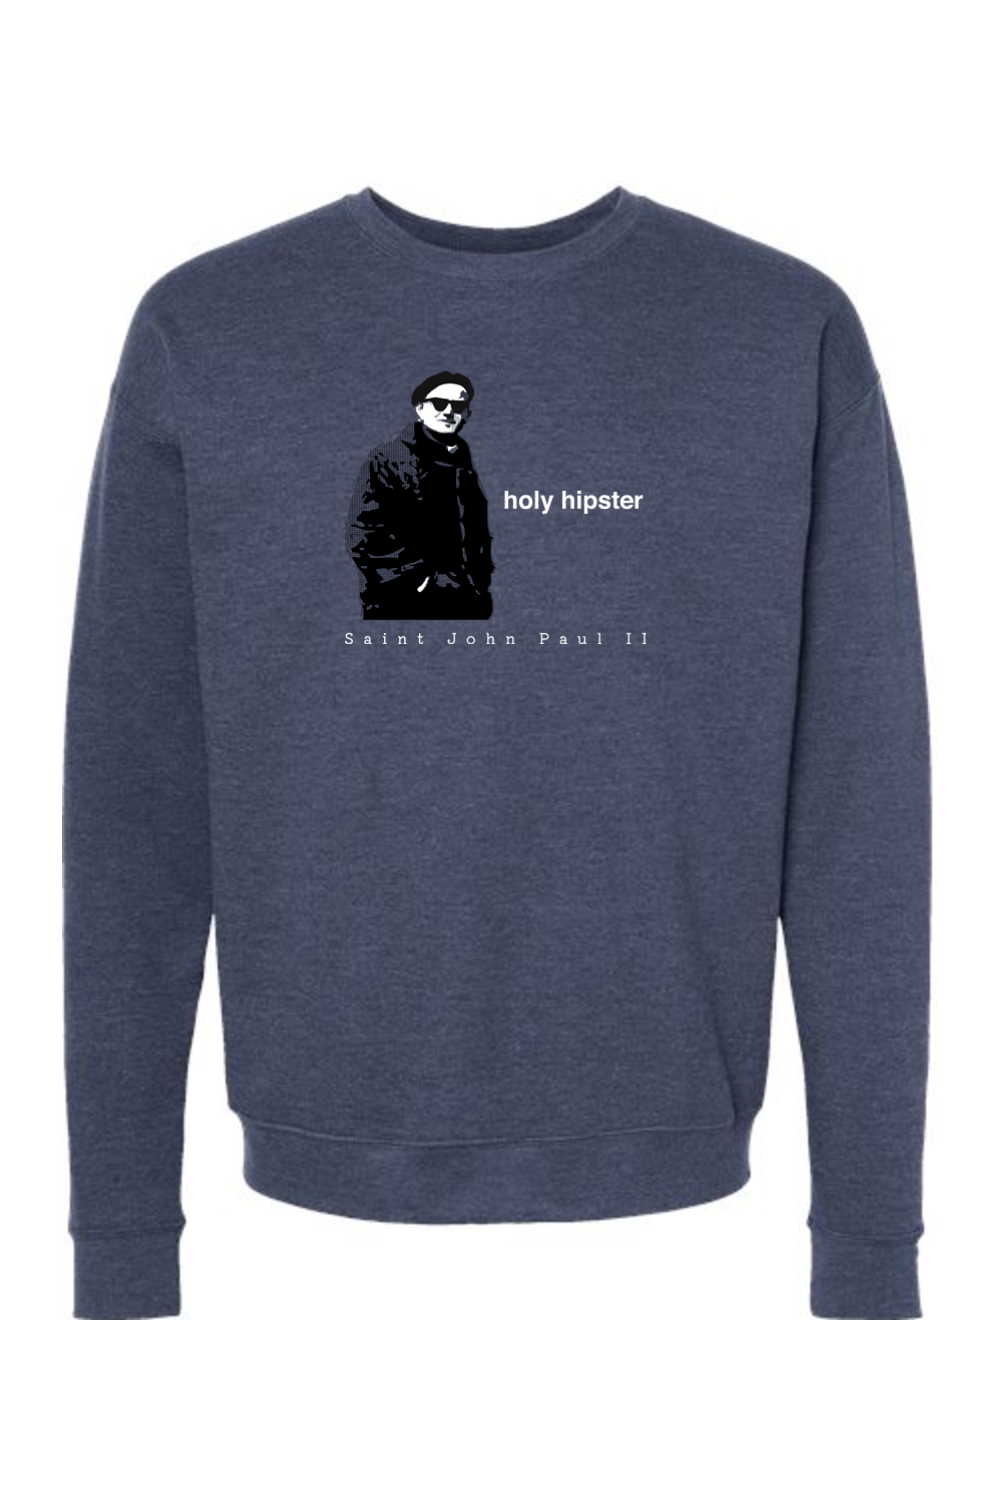 Holy Hipster - St John Paul II Crewneck Sweatshirt